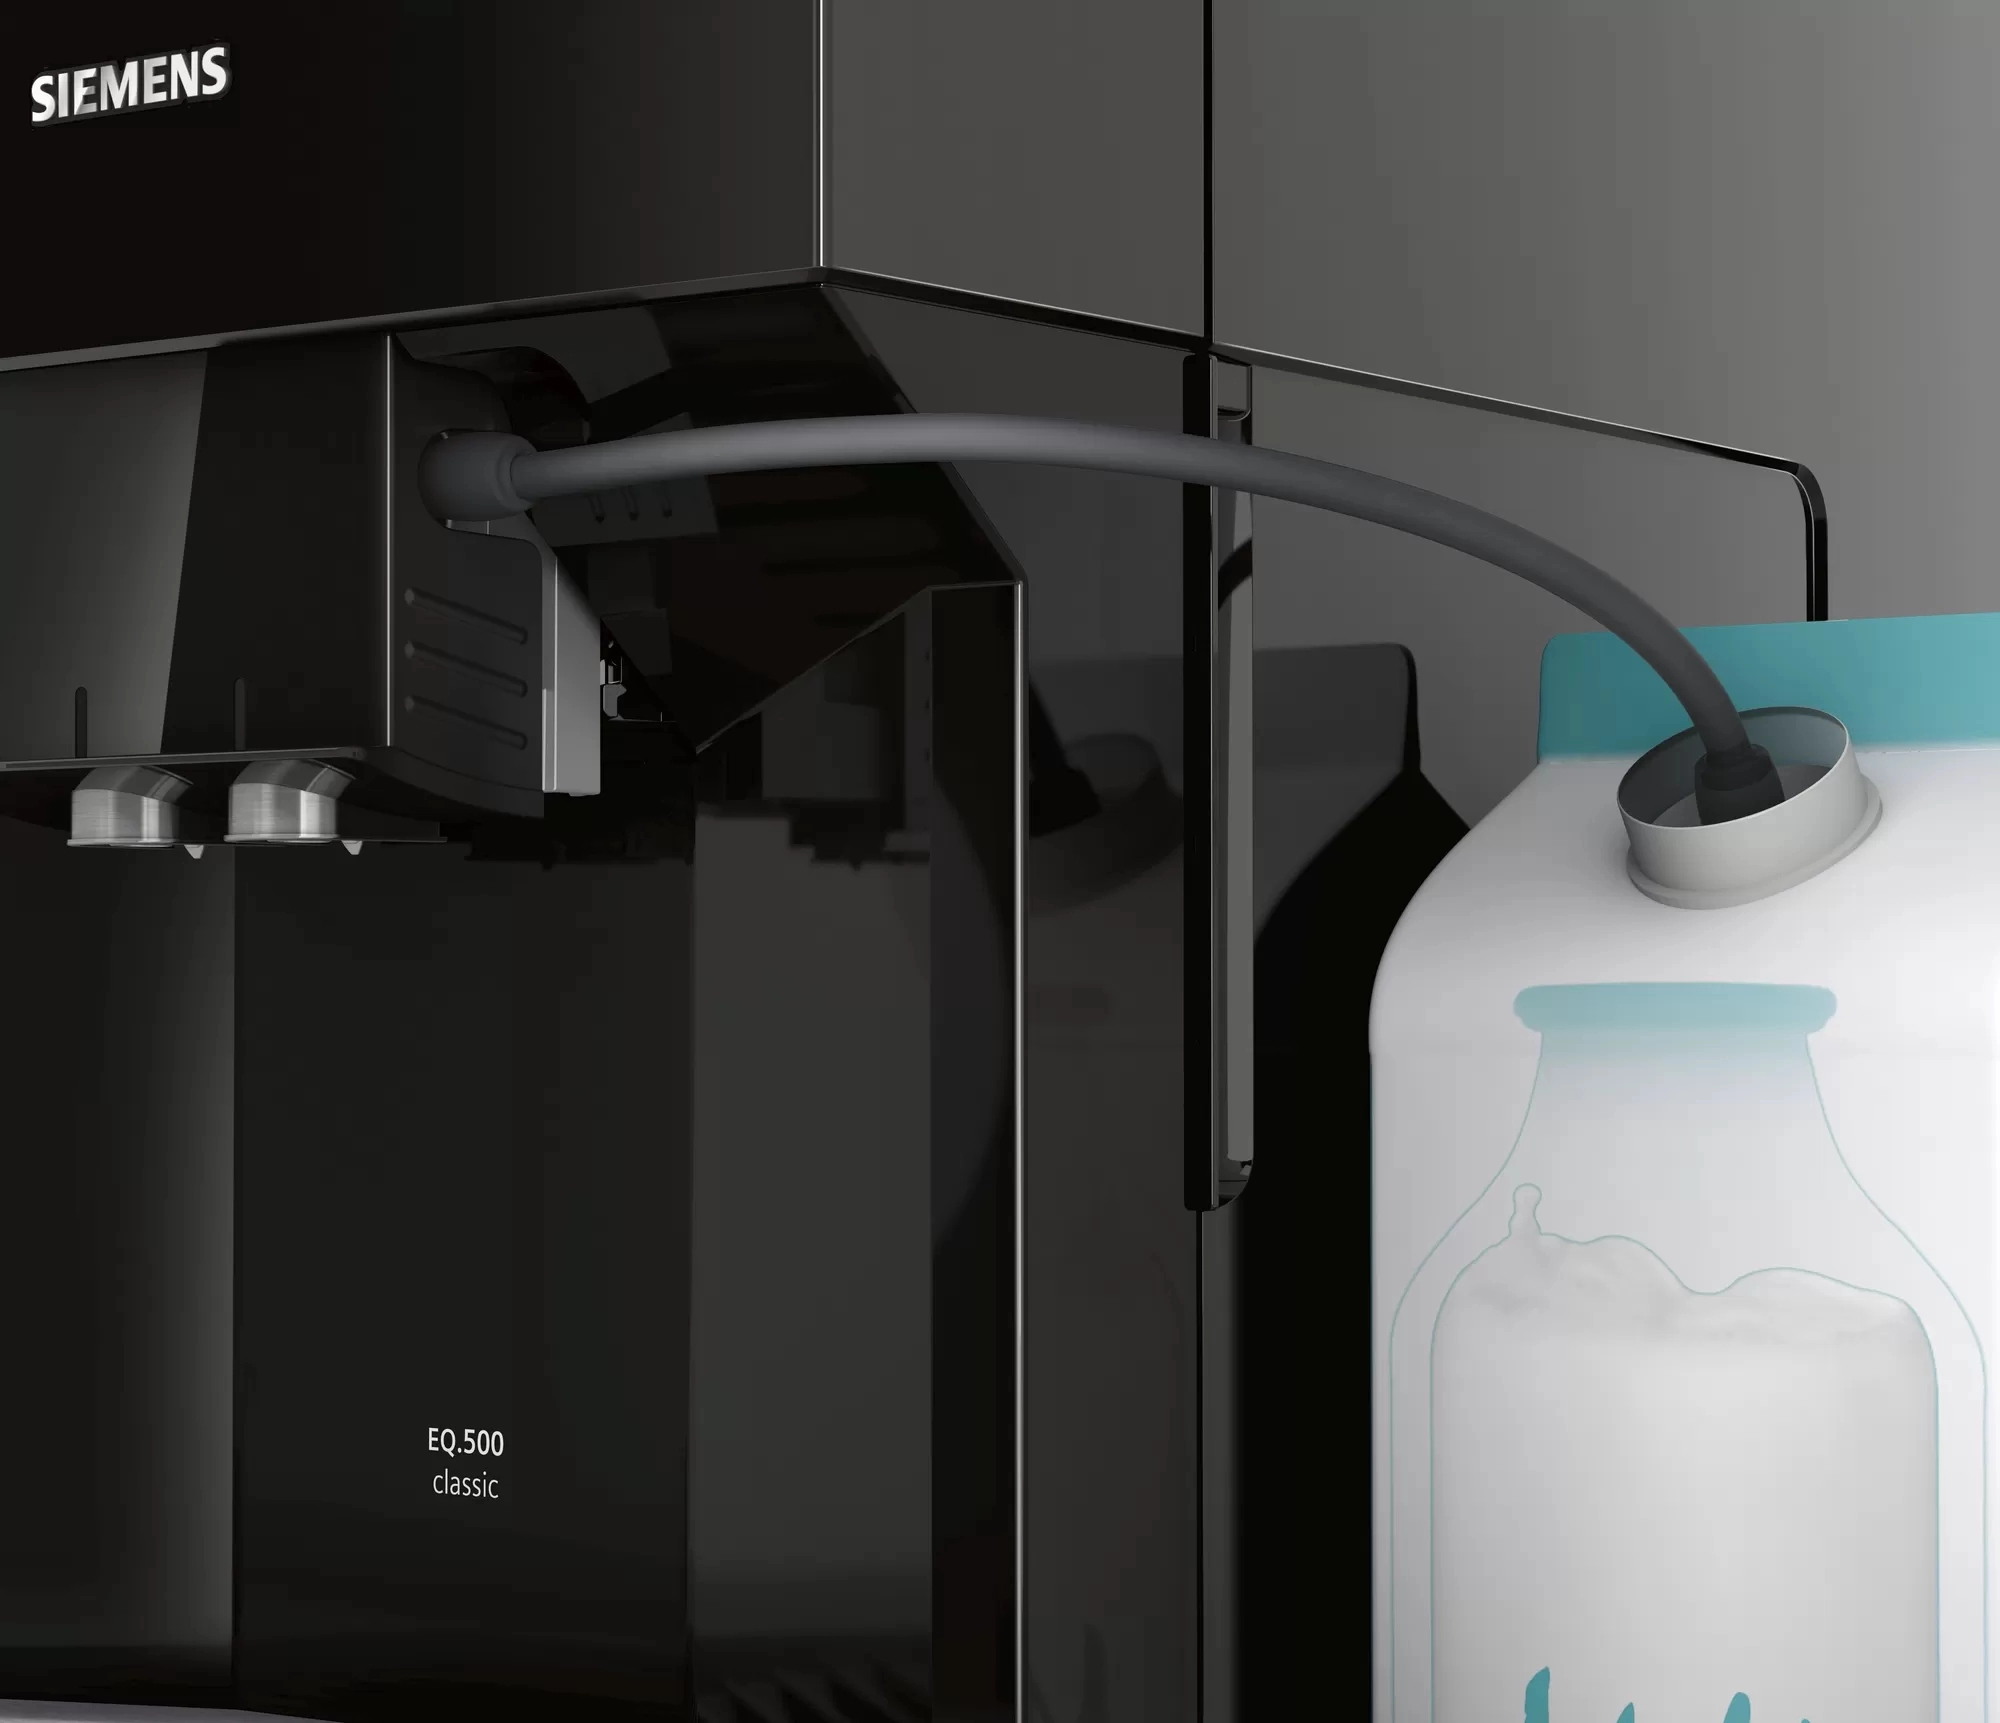 Кофемашина эспрессо Siemens TP501R09